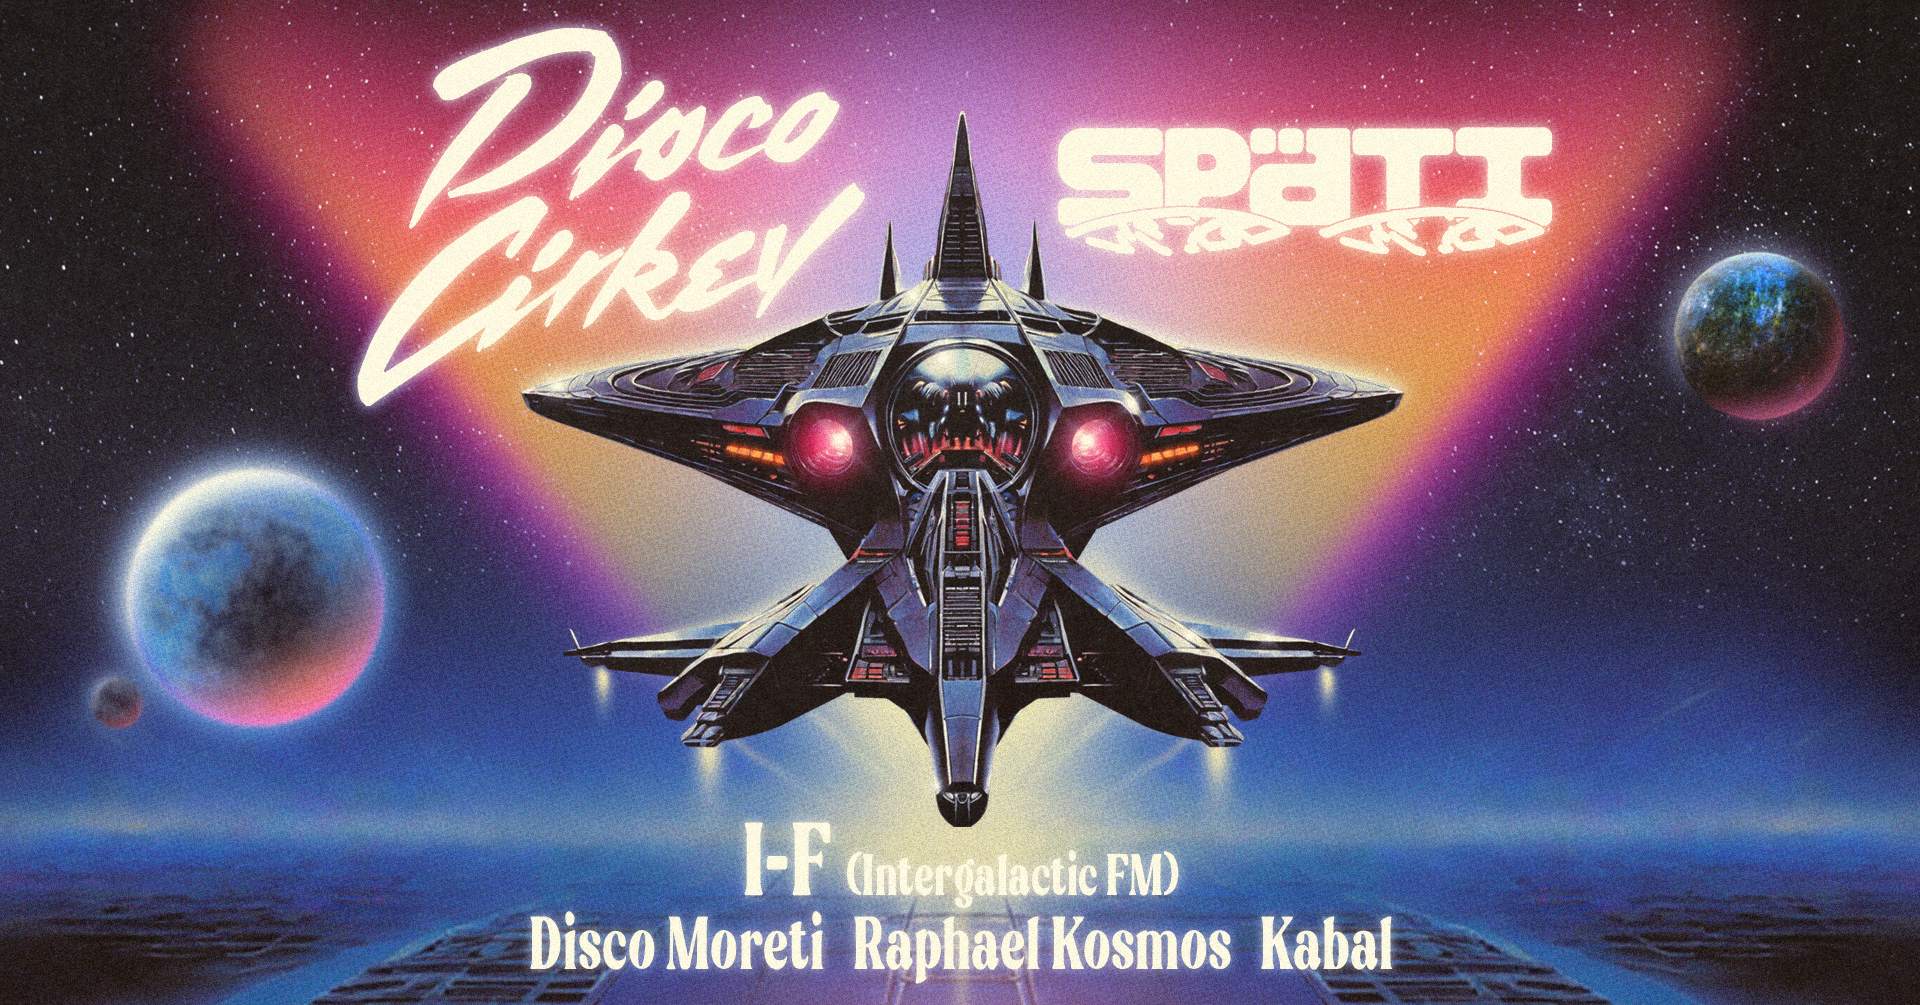 Disco Církev x Späti Records with I-F, Disco Møreti, Kabal & Raphael Kosmos - フライヤー表